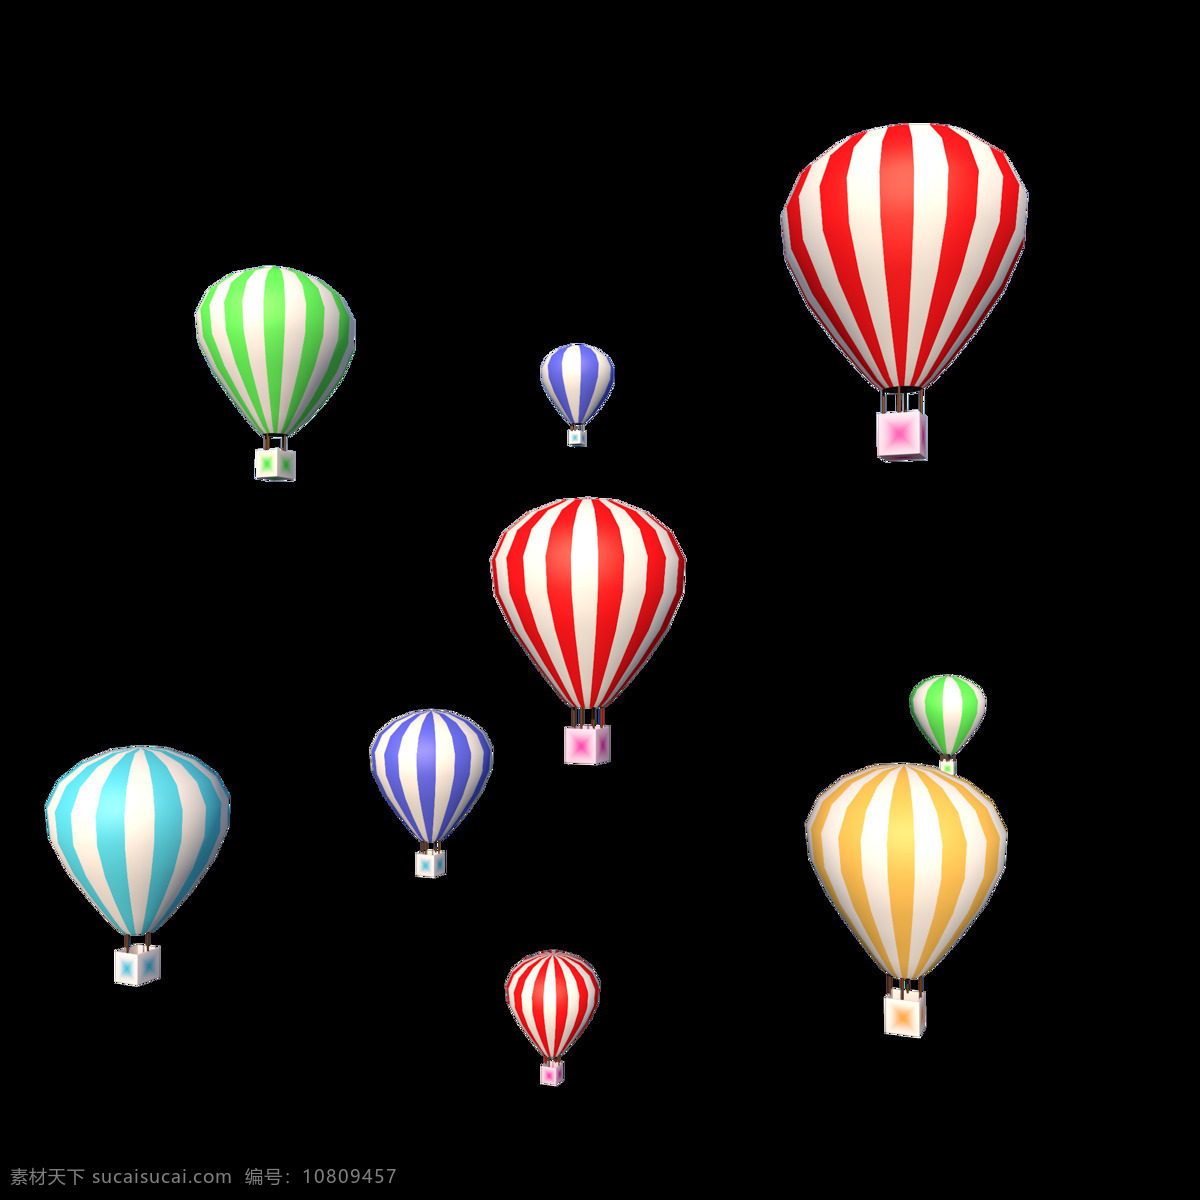 3d 彩色 漂浮 热气球 c4d 活动 气球 气球素材 活动气球 c4d素材 c4d气球